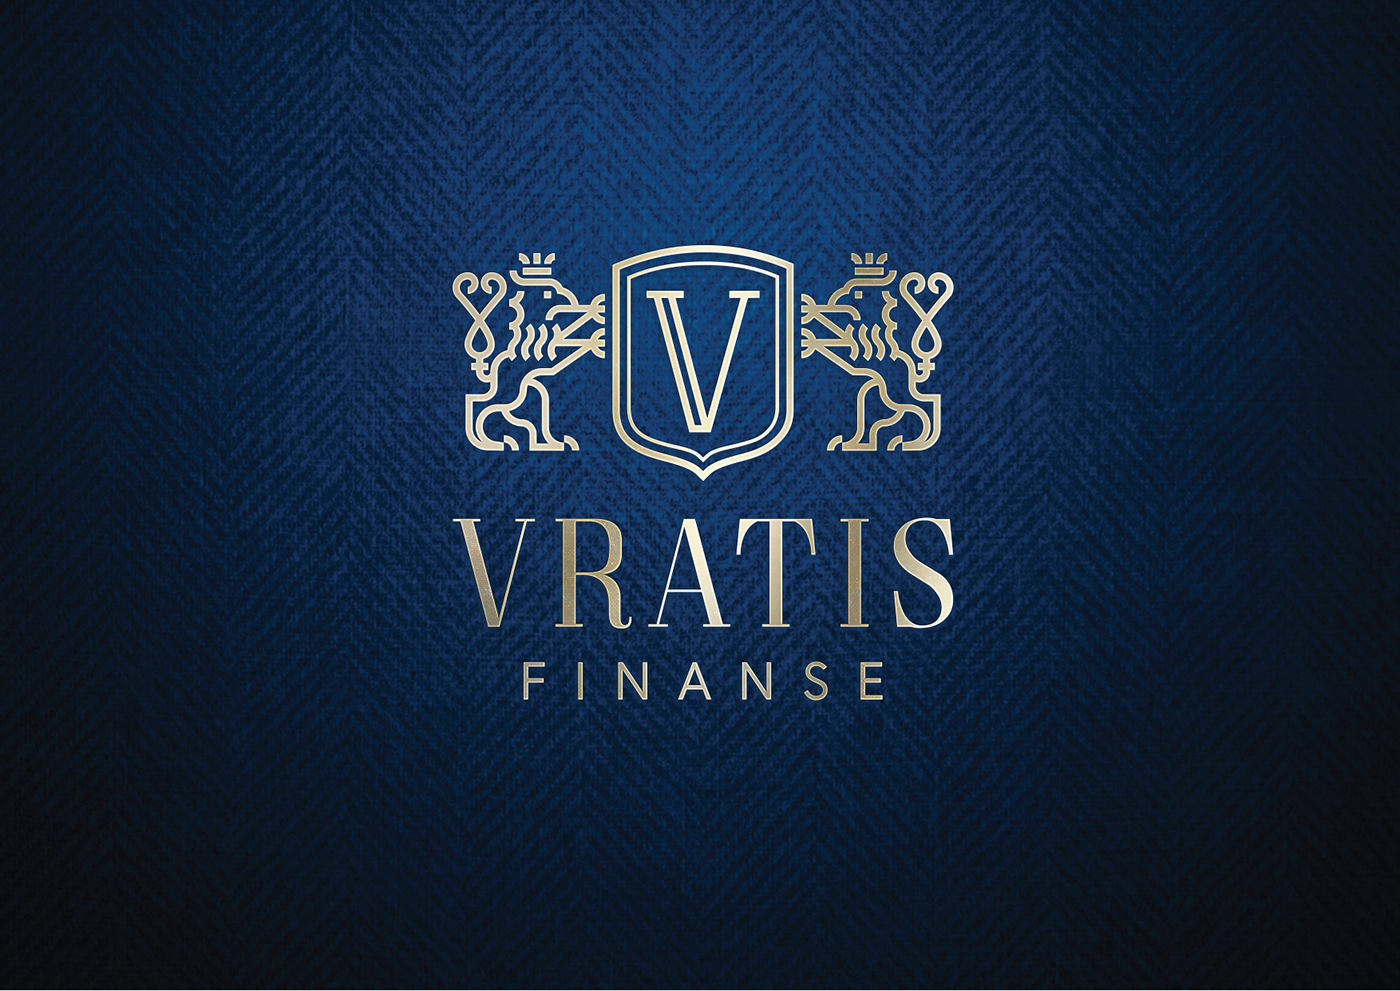 logo finance graphic identyfication Bank elegant luxury heraldic lion shield